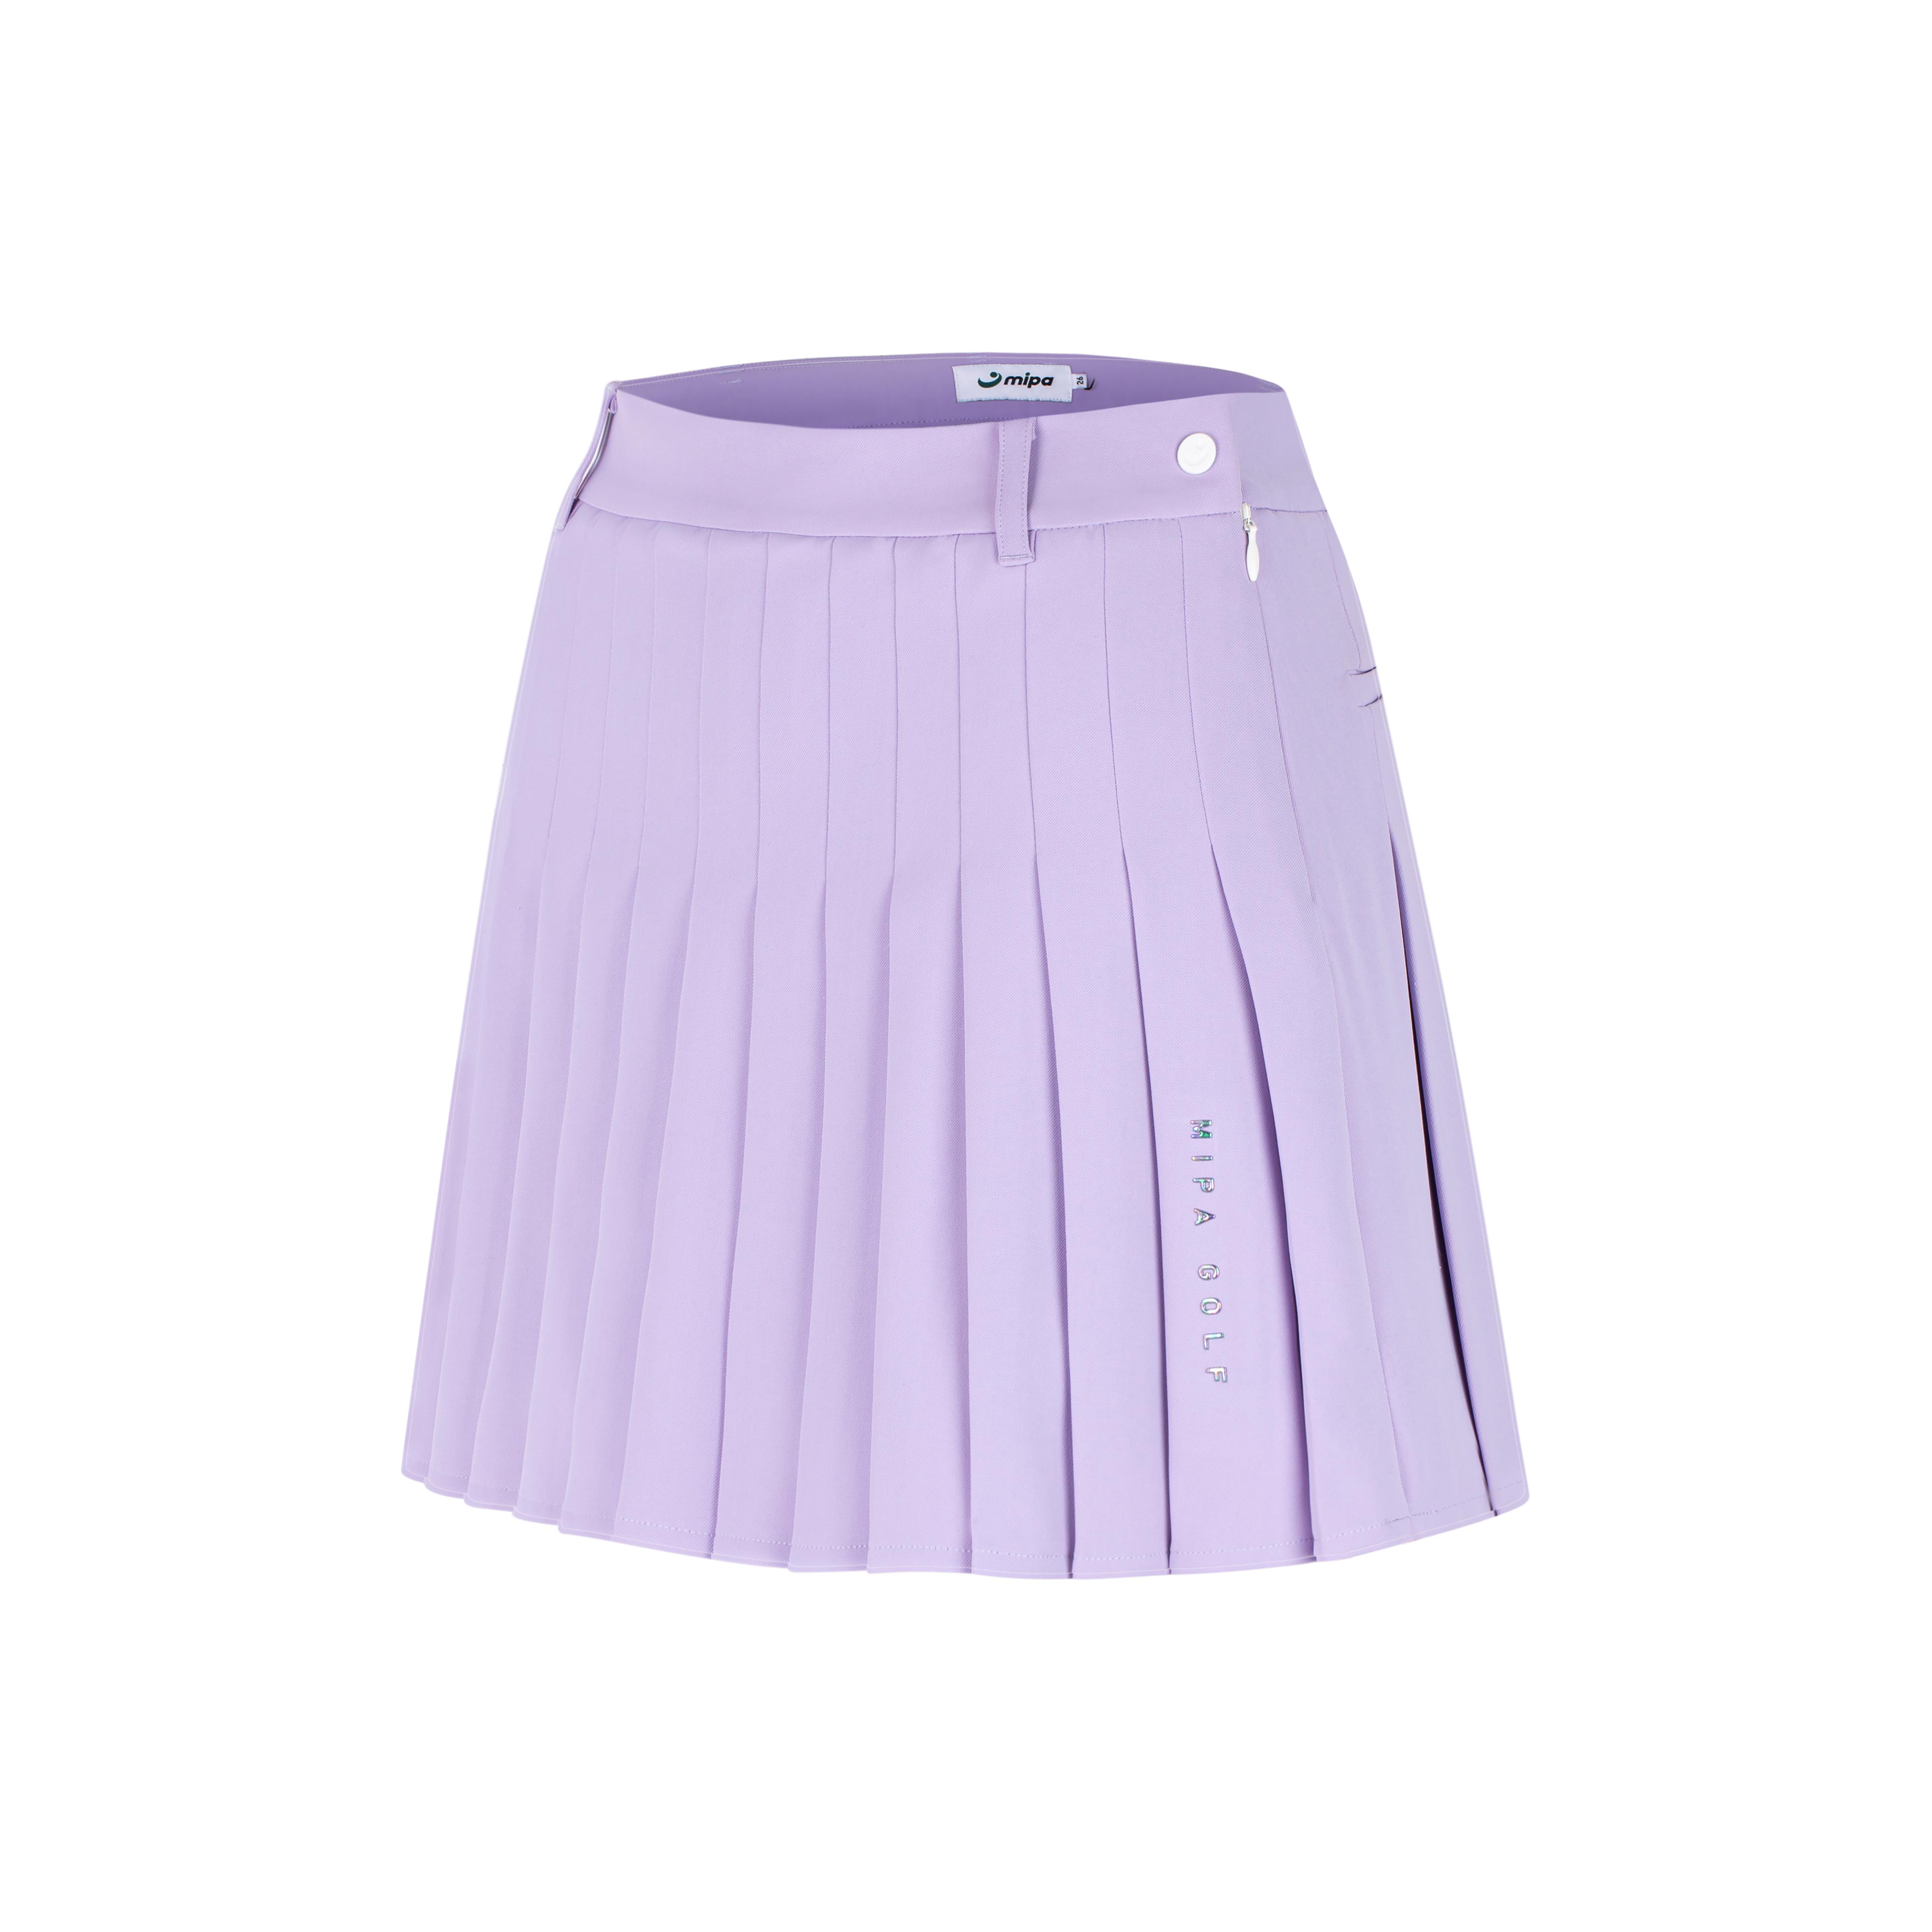 Wendy skirt